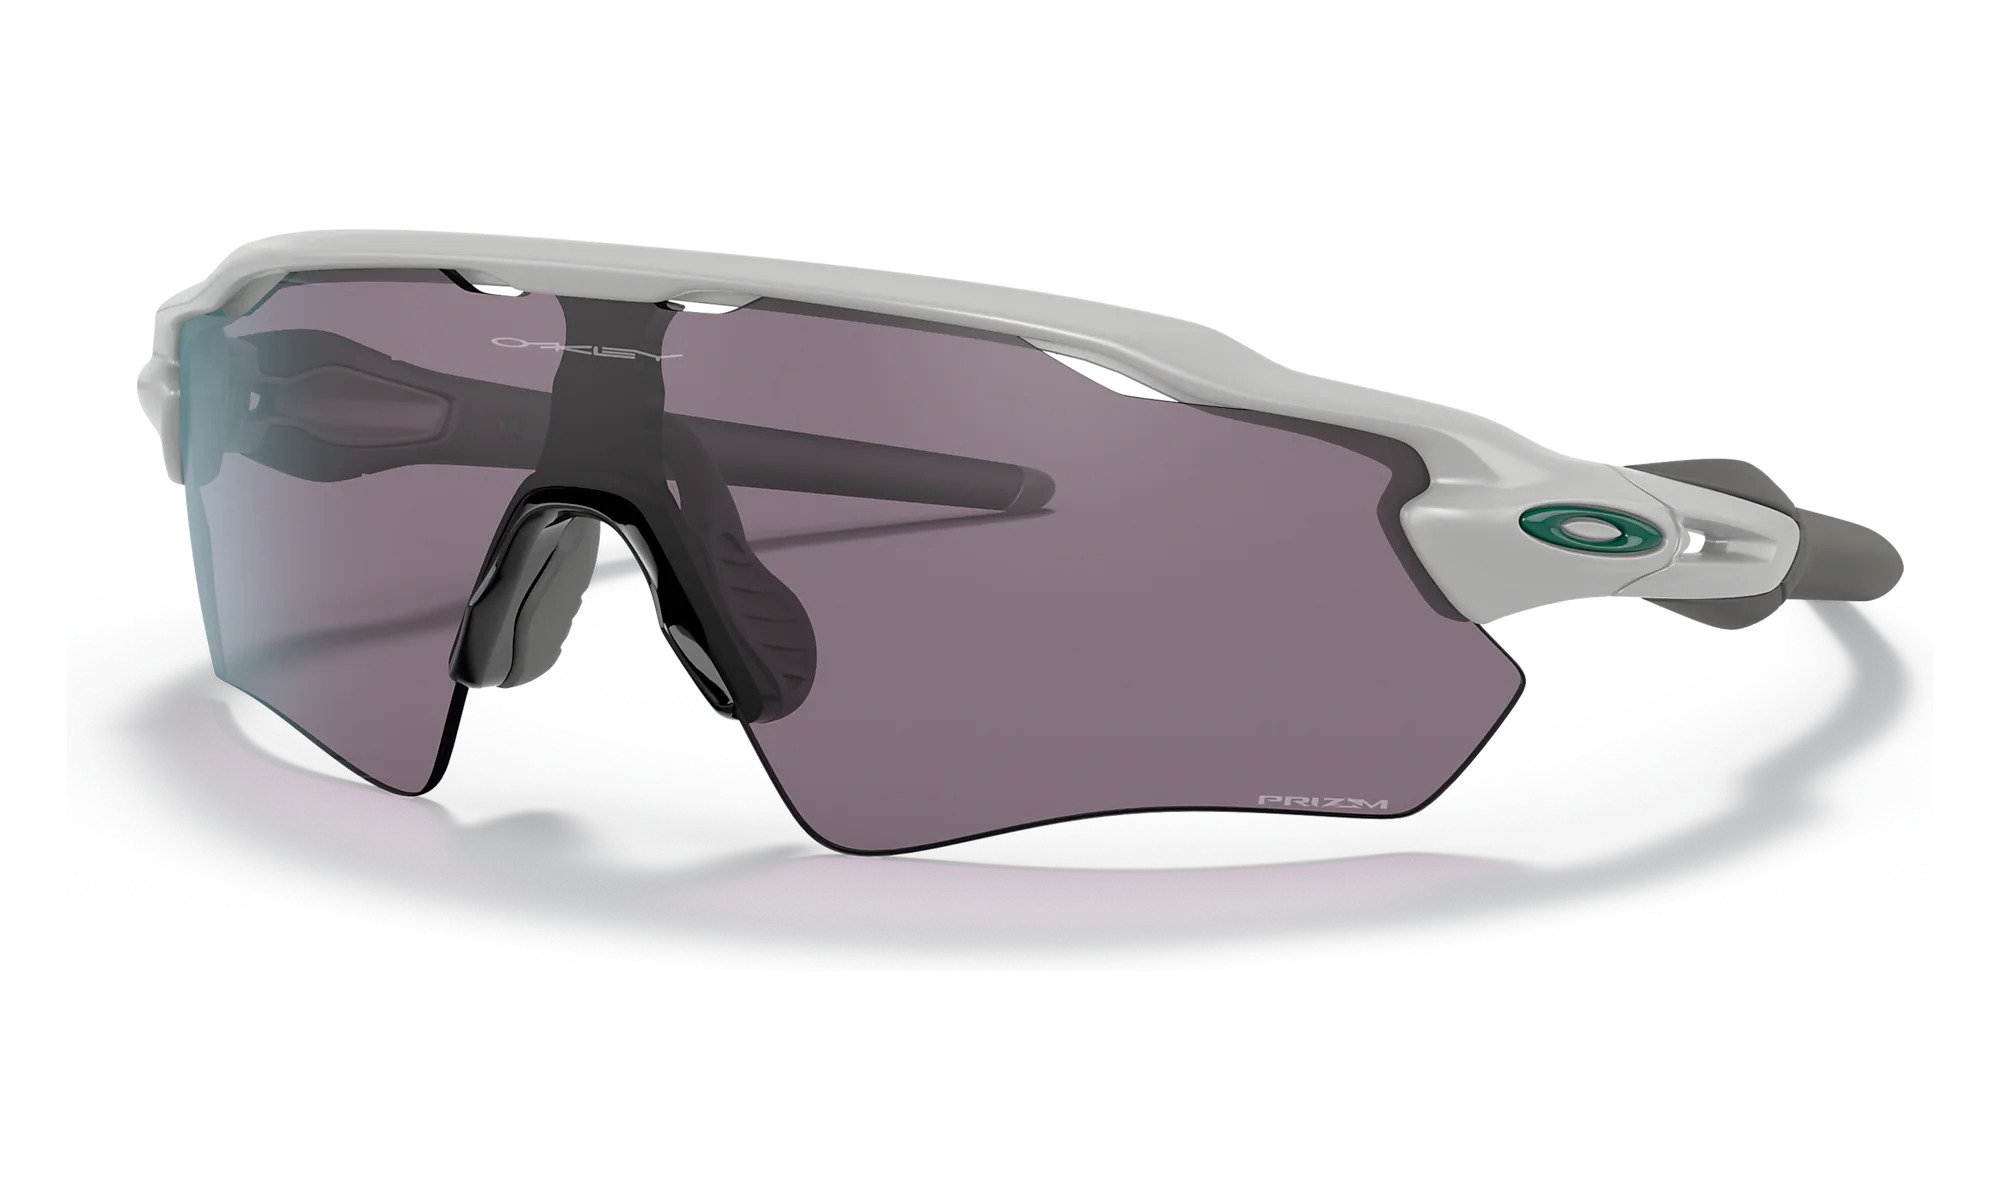 OAKLEY Radar EV Path Sunglasses -NEW- Authentic Oakley - Prizm Lens + Hard  Case